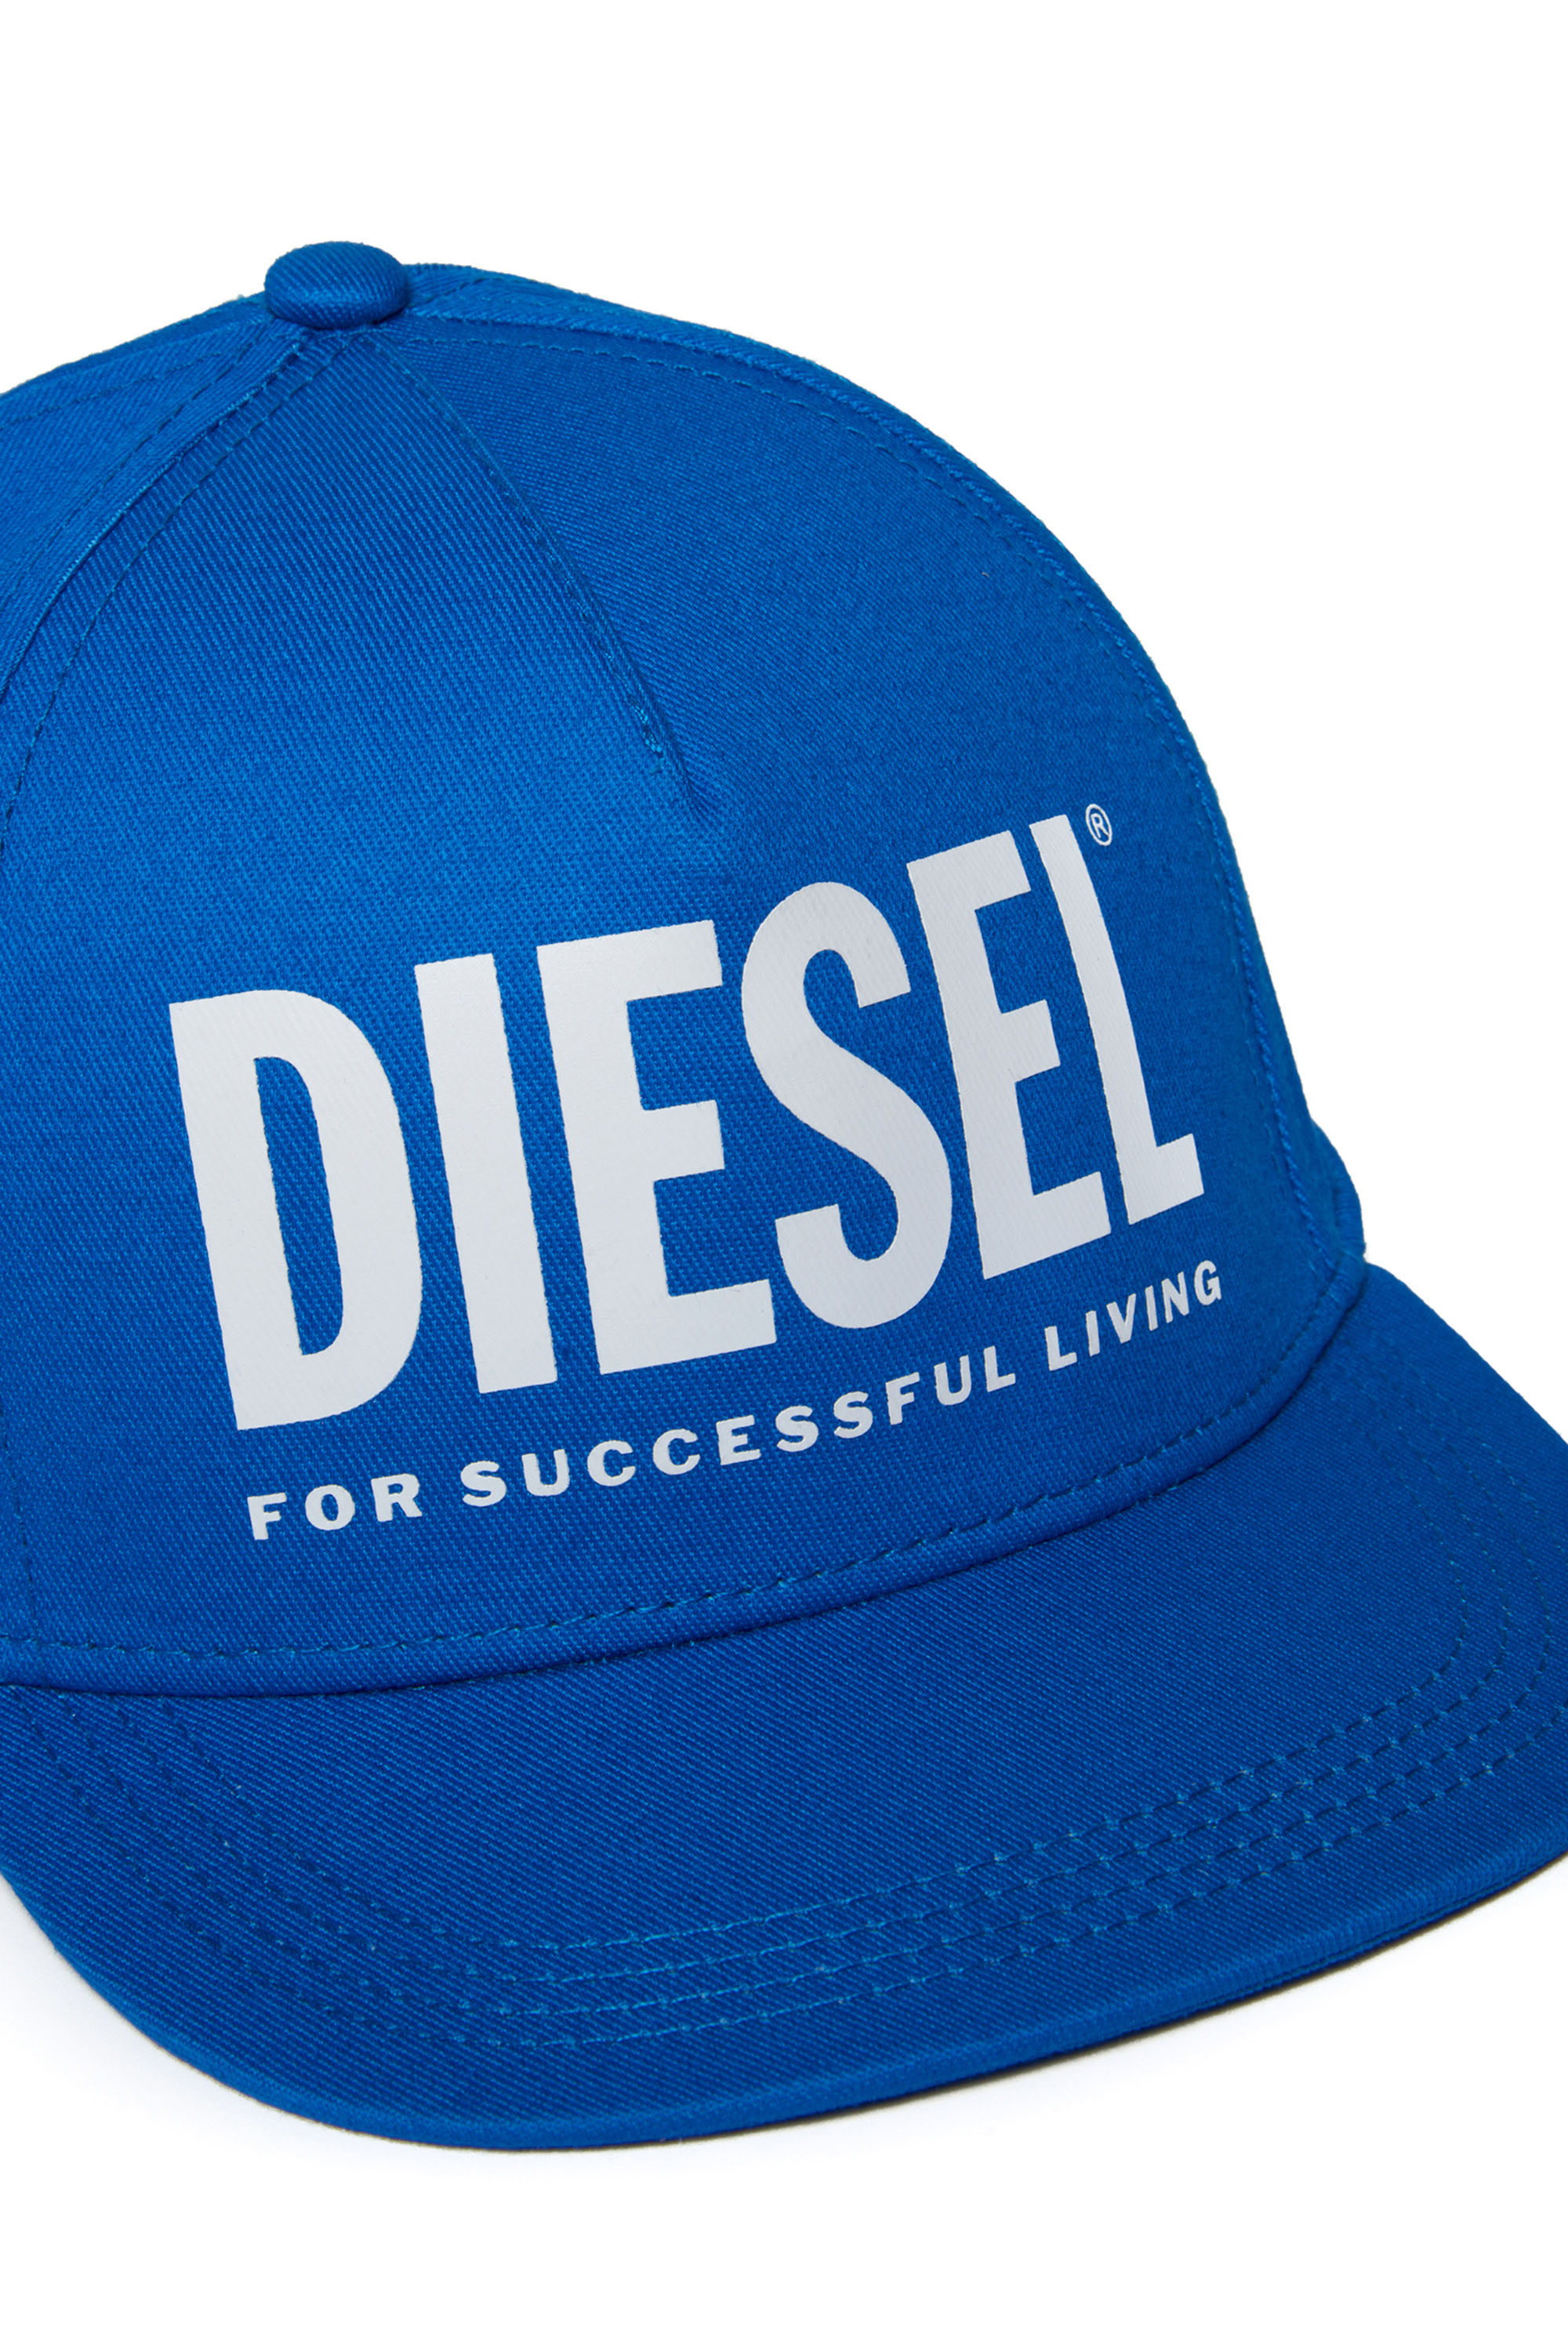 Diesel - FOLLY, Bleu - Image 3